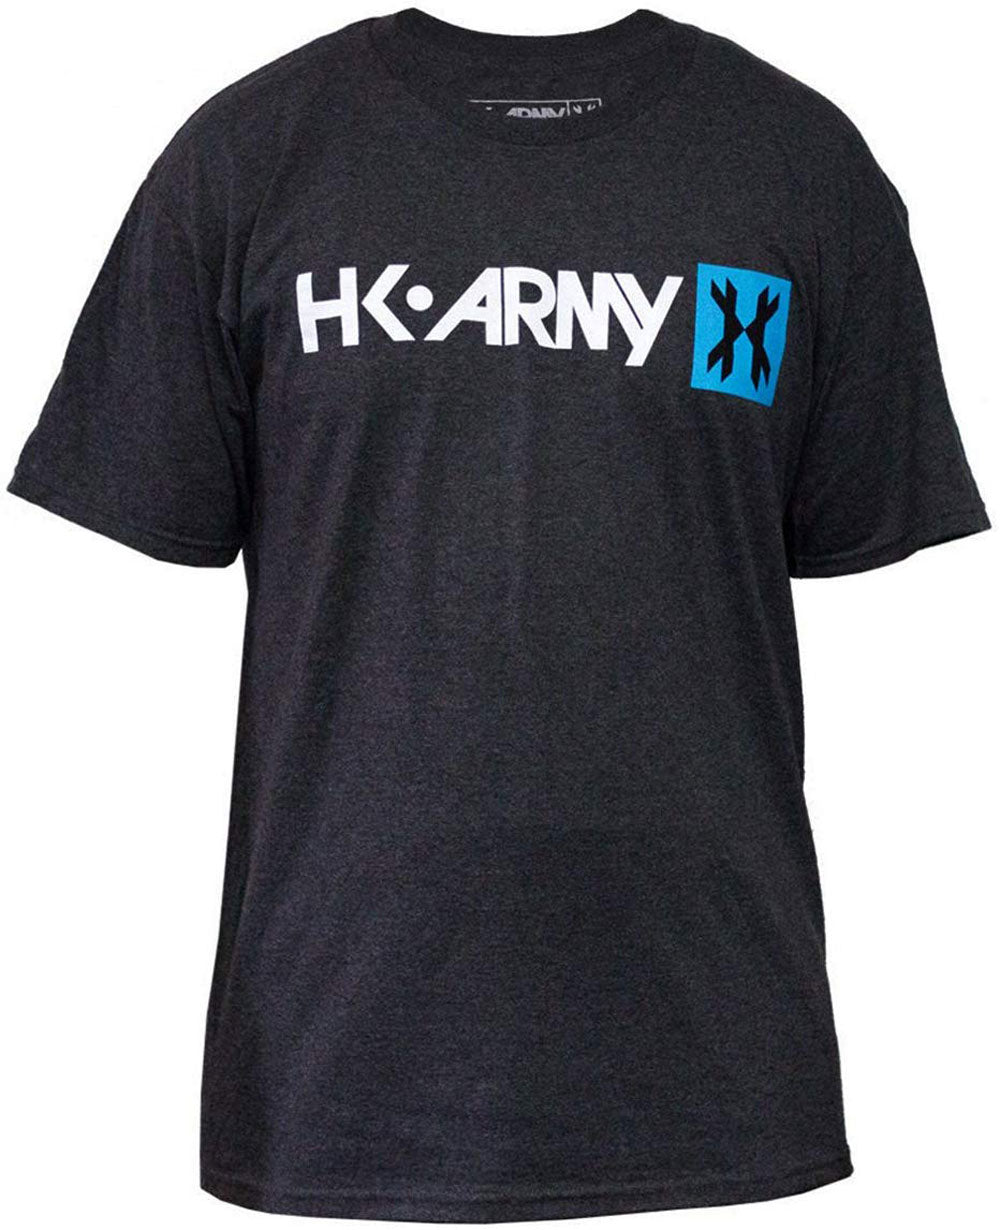 HK Army Icon T-Shirt Charcoal Grey - Medium - HK Army